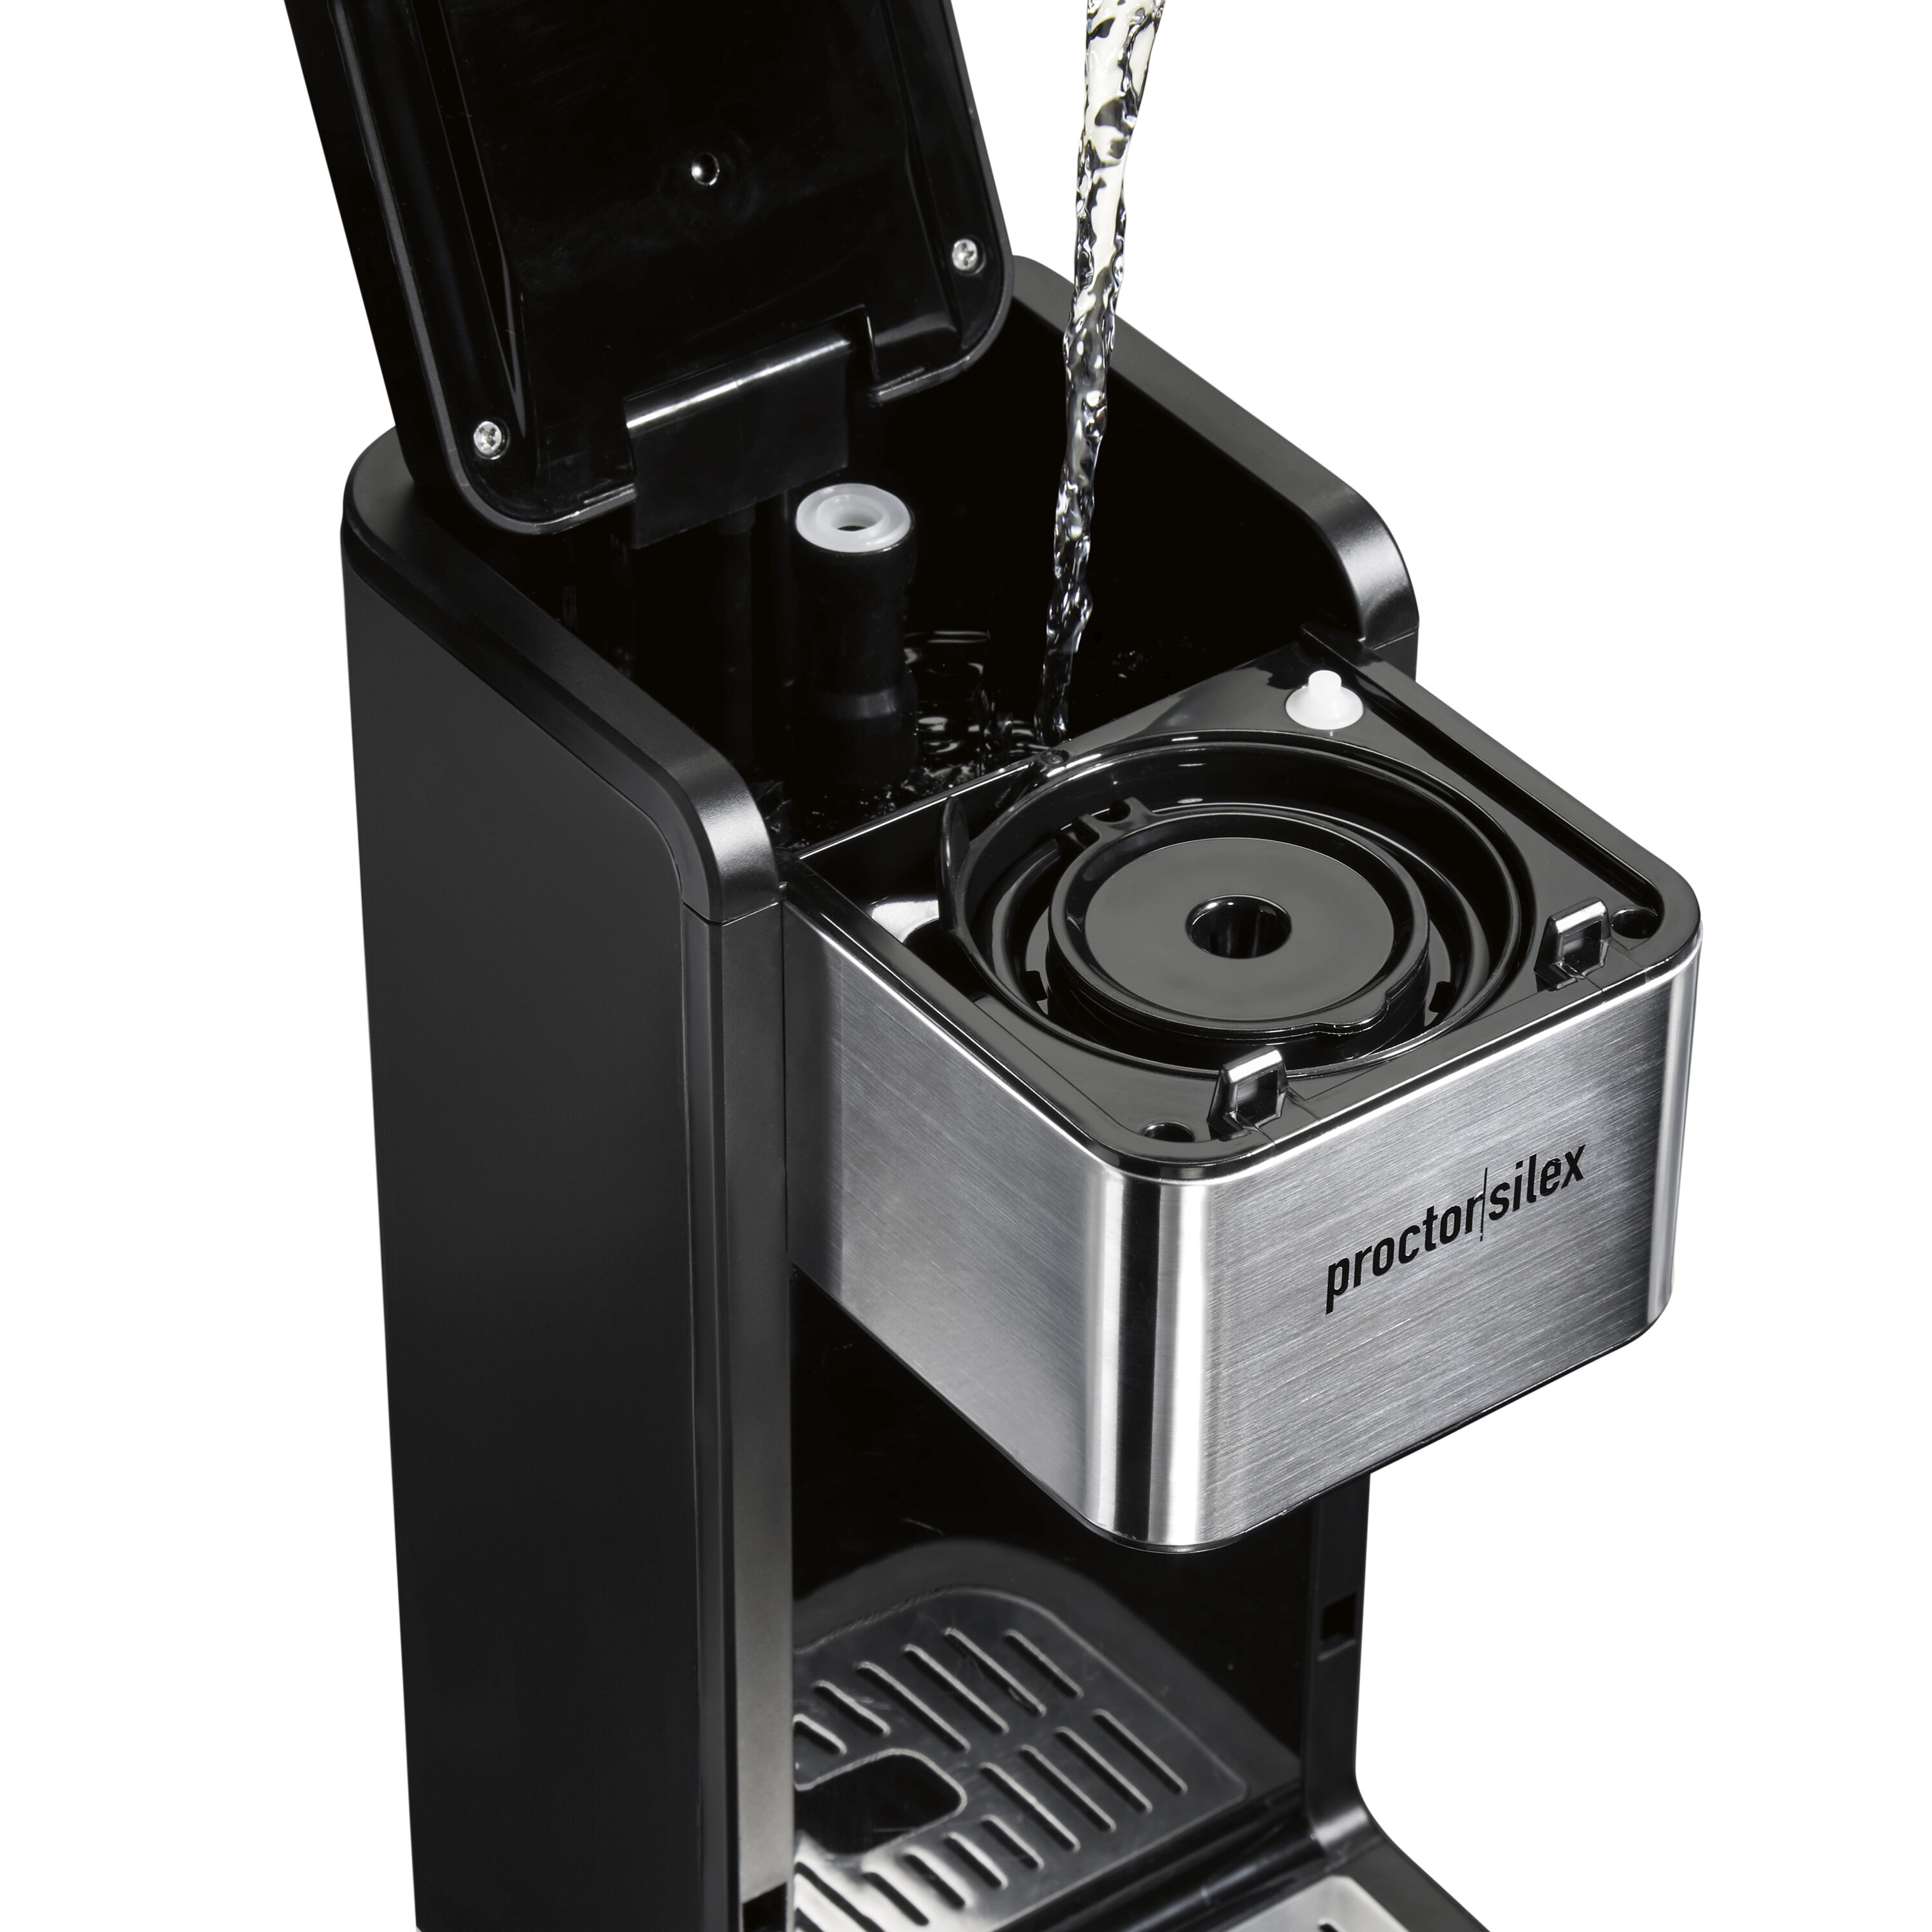 Vintage Proctor-silex Automatic Coffee Machine / Coffee Maker